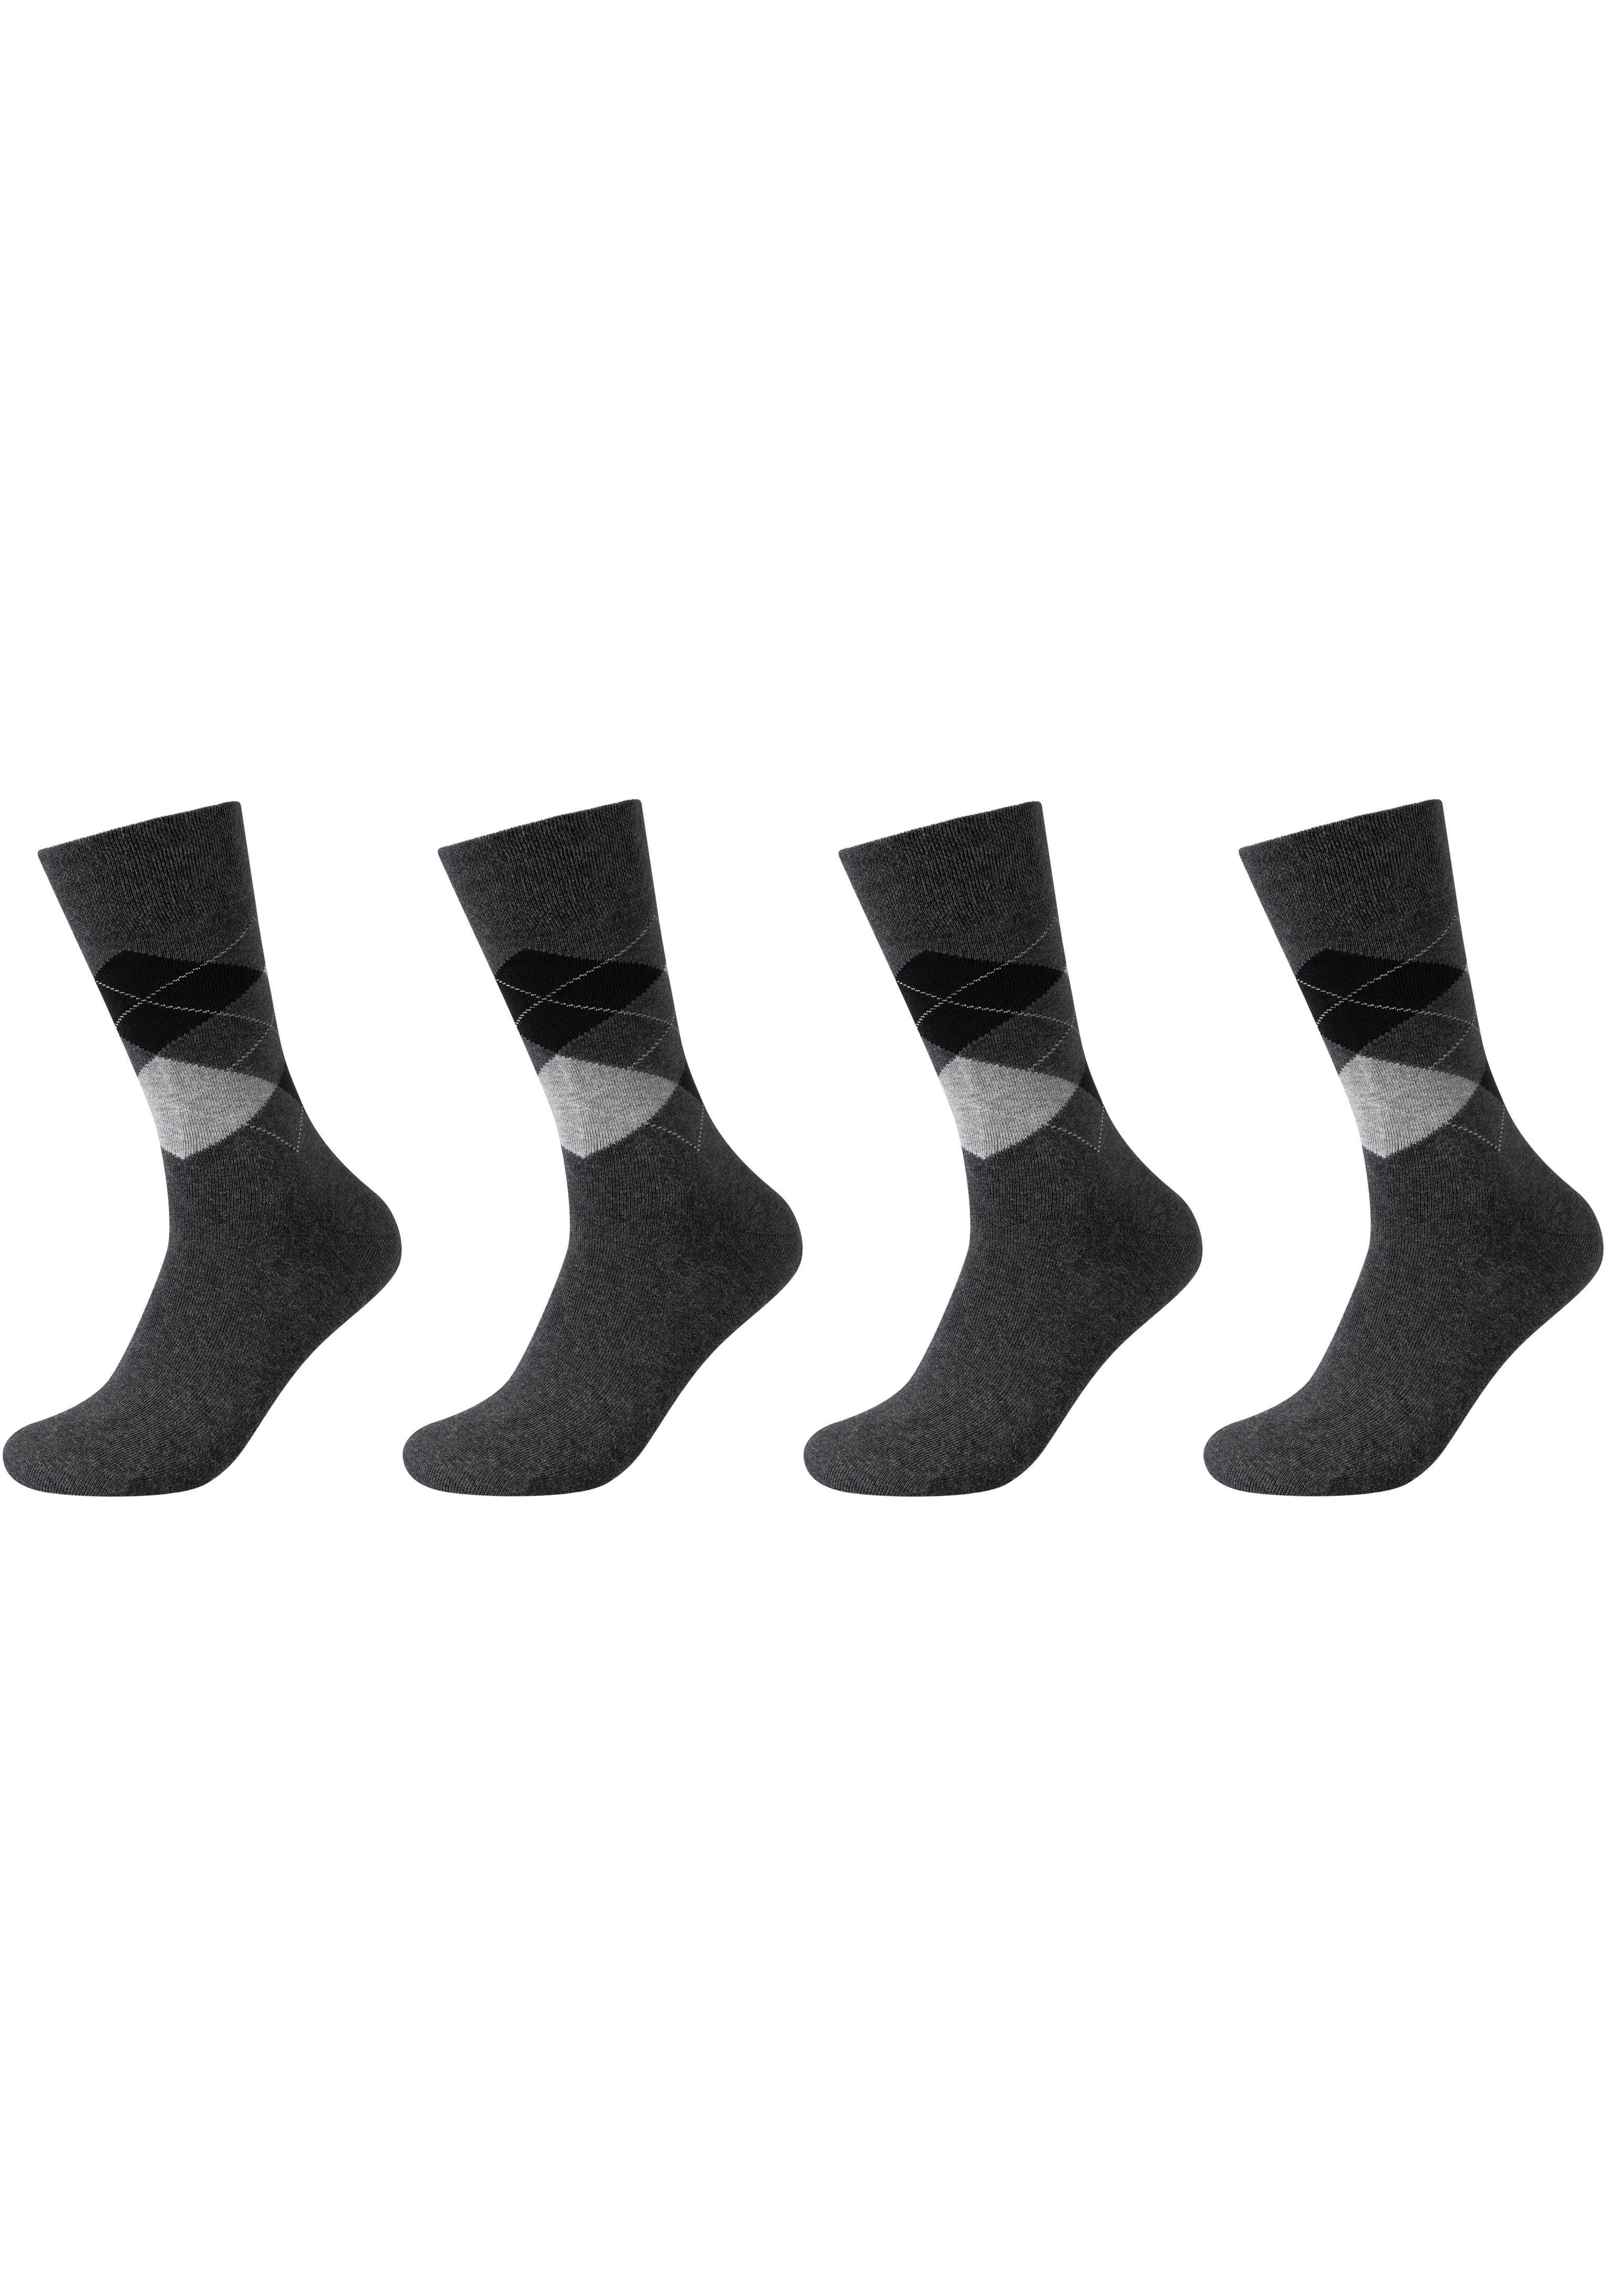 anthrazit Faltenfreier Socken (Packung, 4-Paar) Camano dank Tragekomfort Elasthan-Anteil